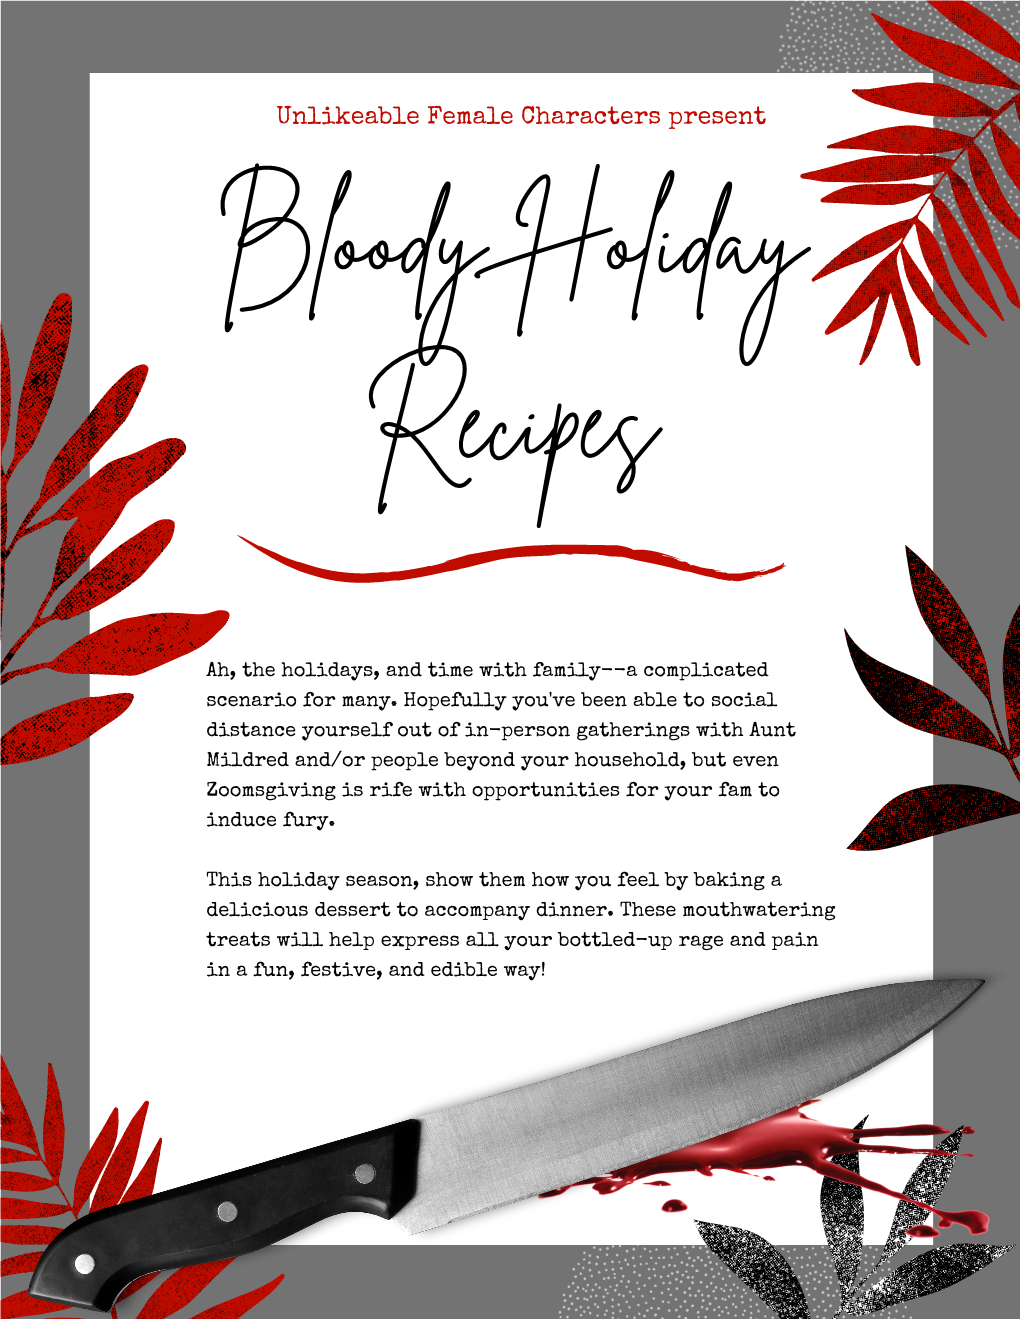 Bloody Holiday Recipes